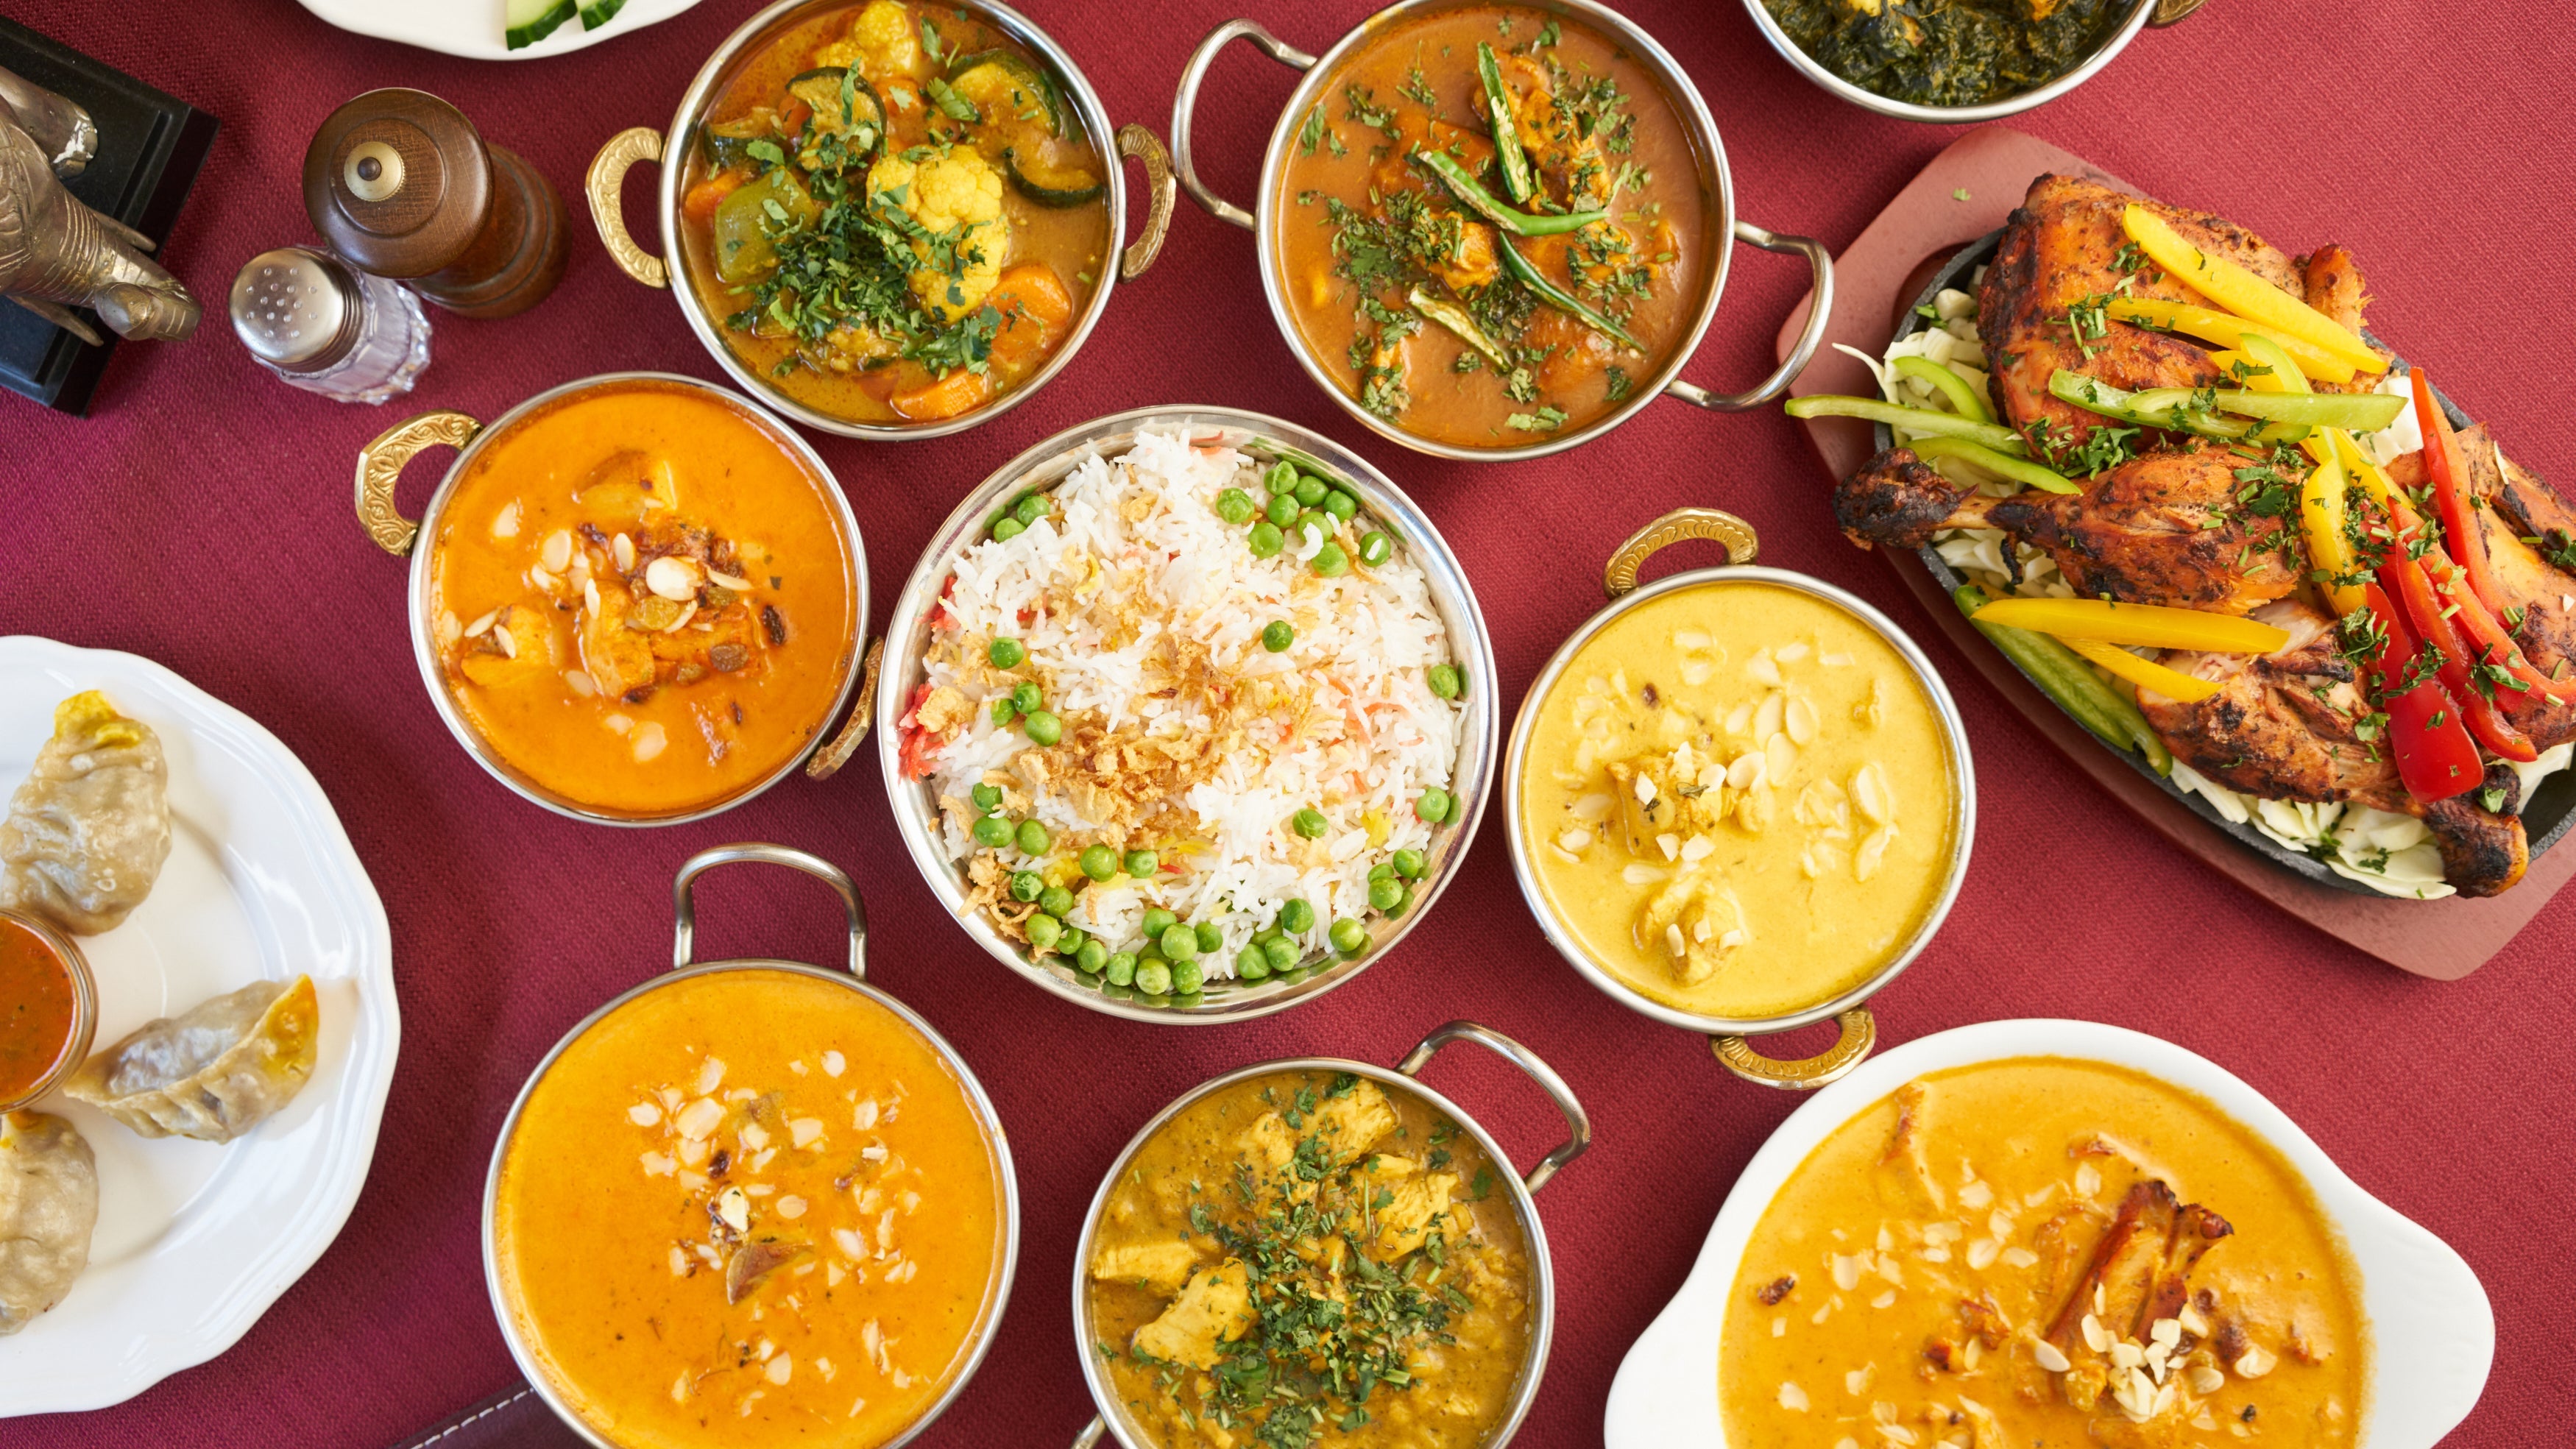 Chandni Indian Cuisine